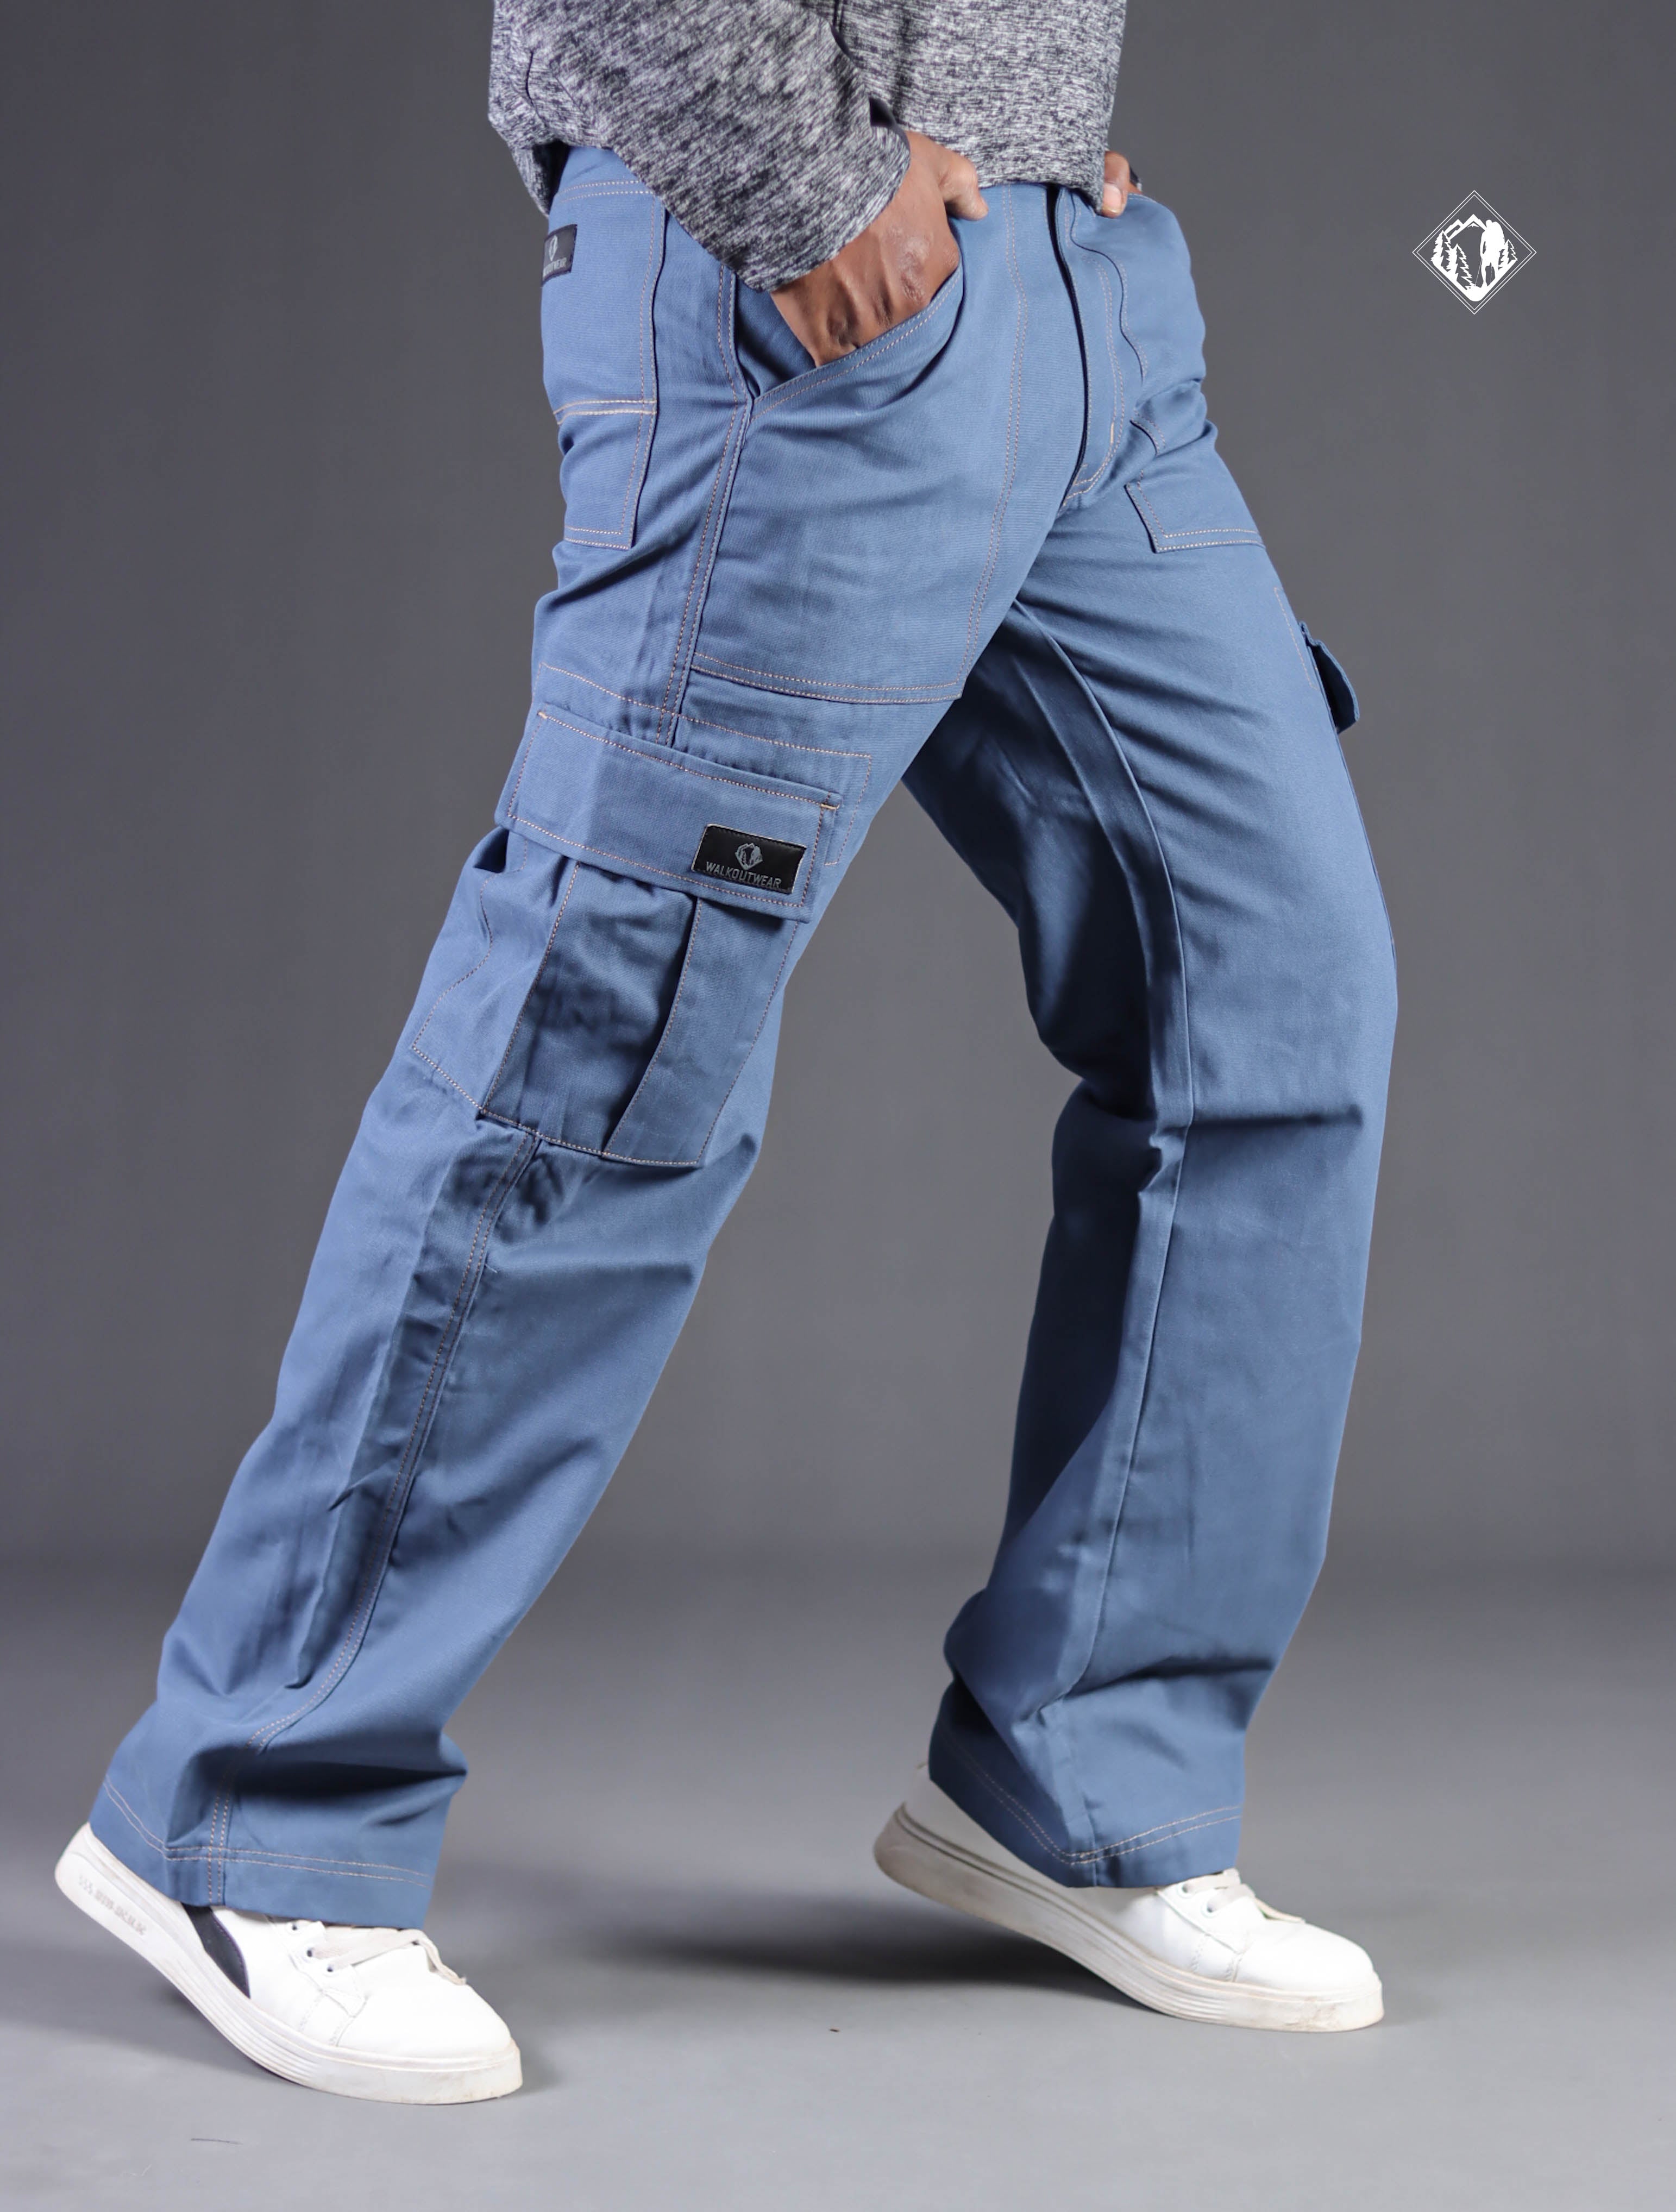 Sapper Cargos  Buy Sapper Six Pockets Cargo Pants For Men  Olive Online   Nykaa Fashion